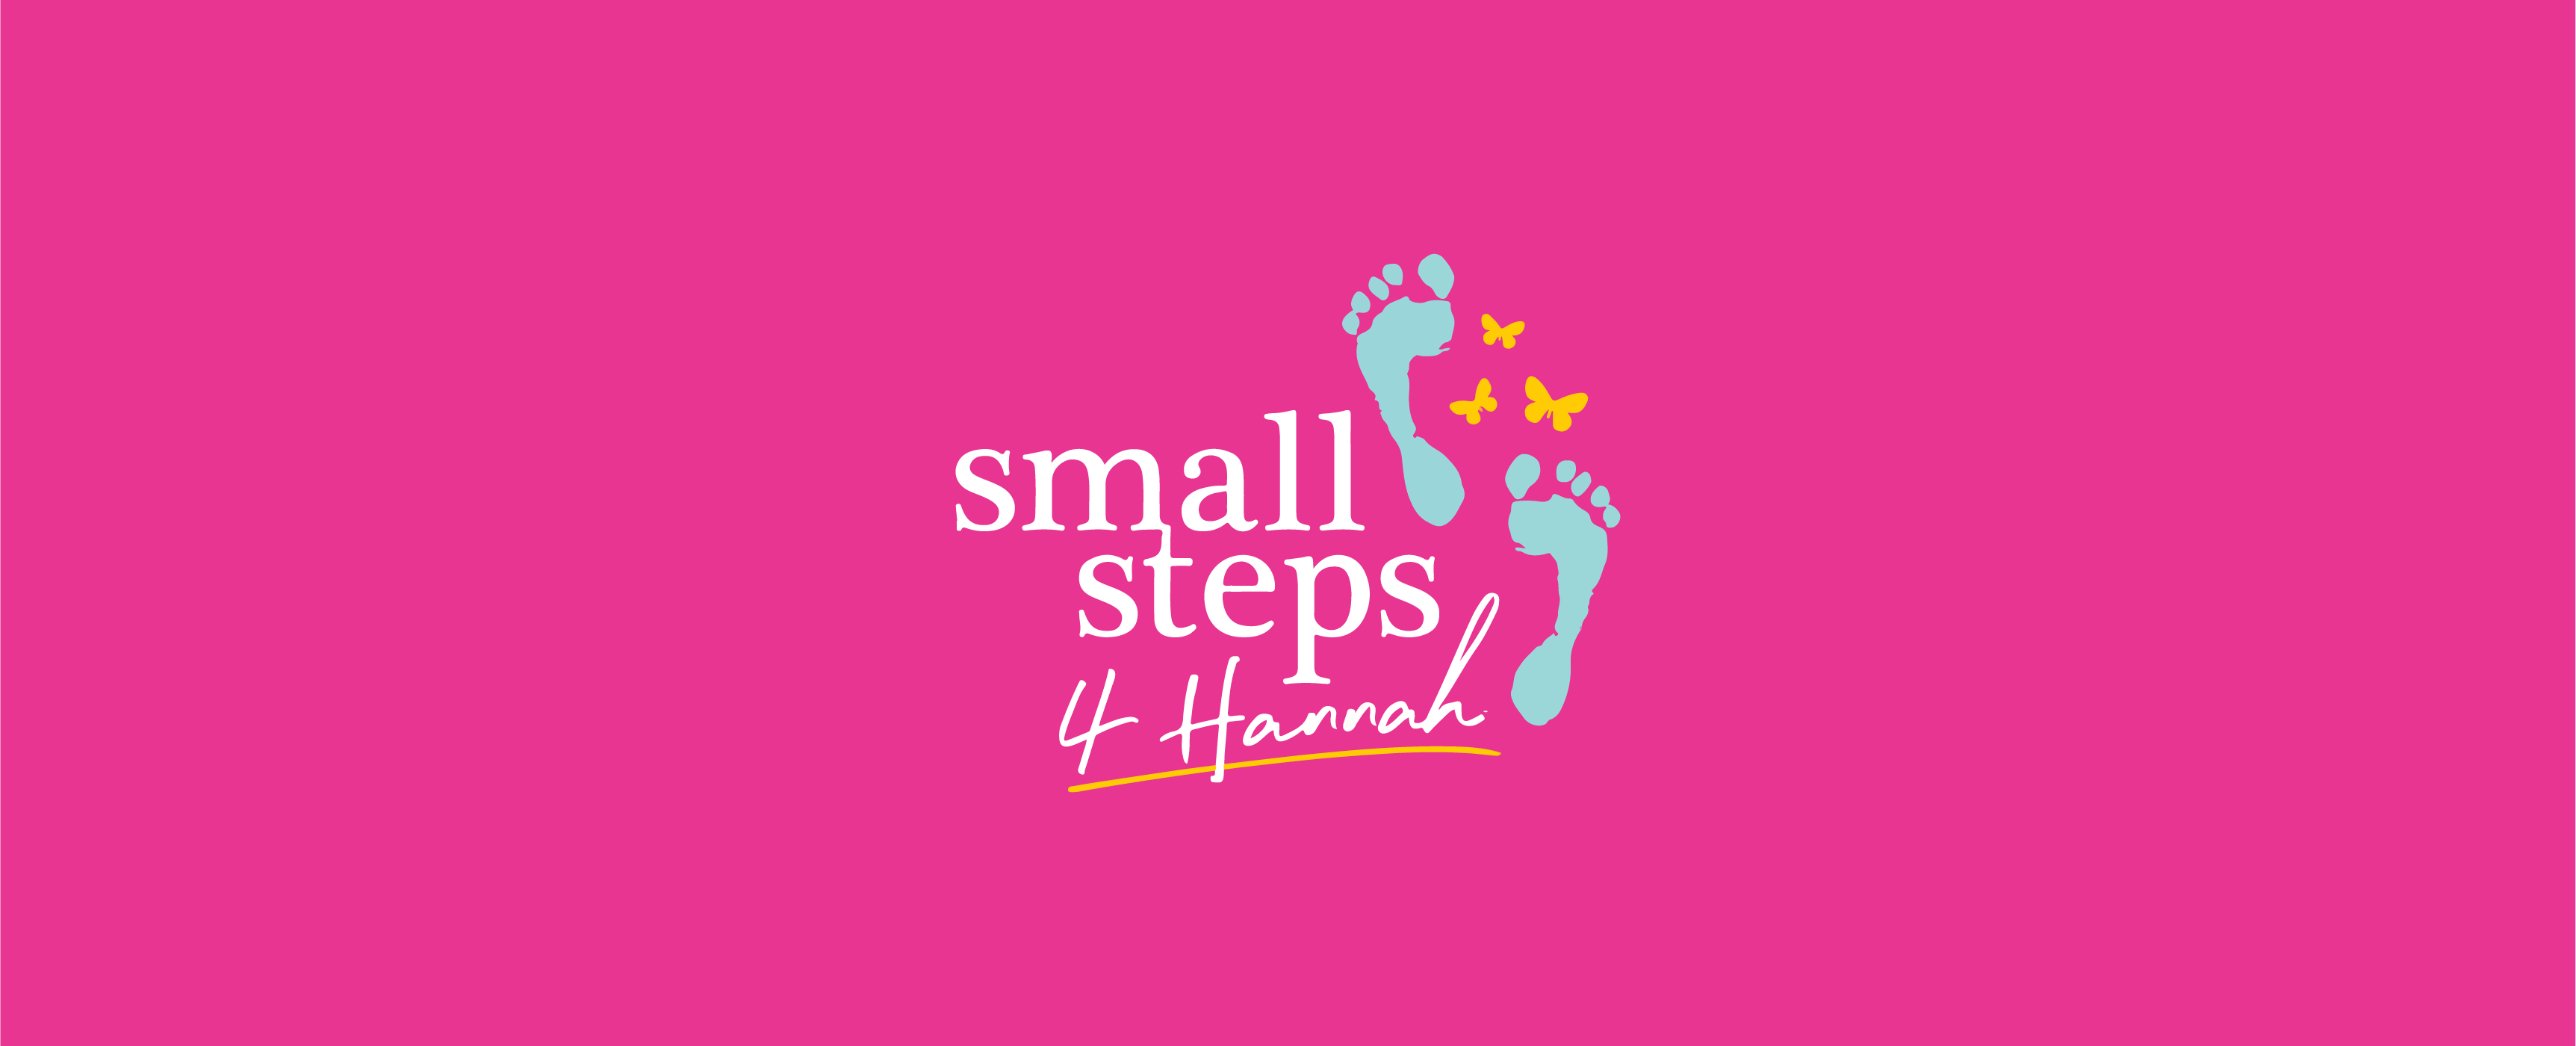 Small Steps 4 Hannah